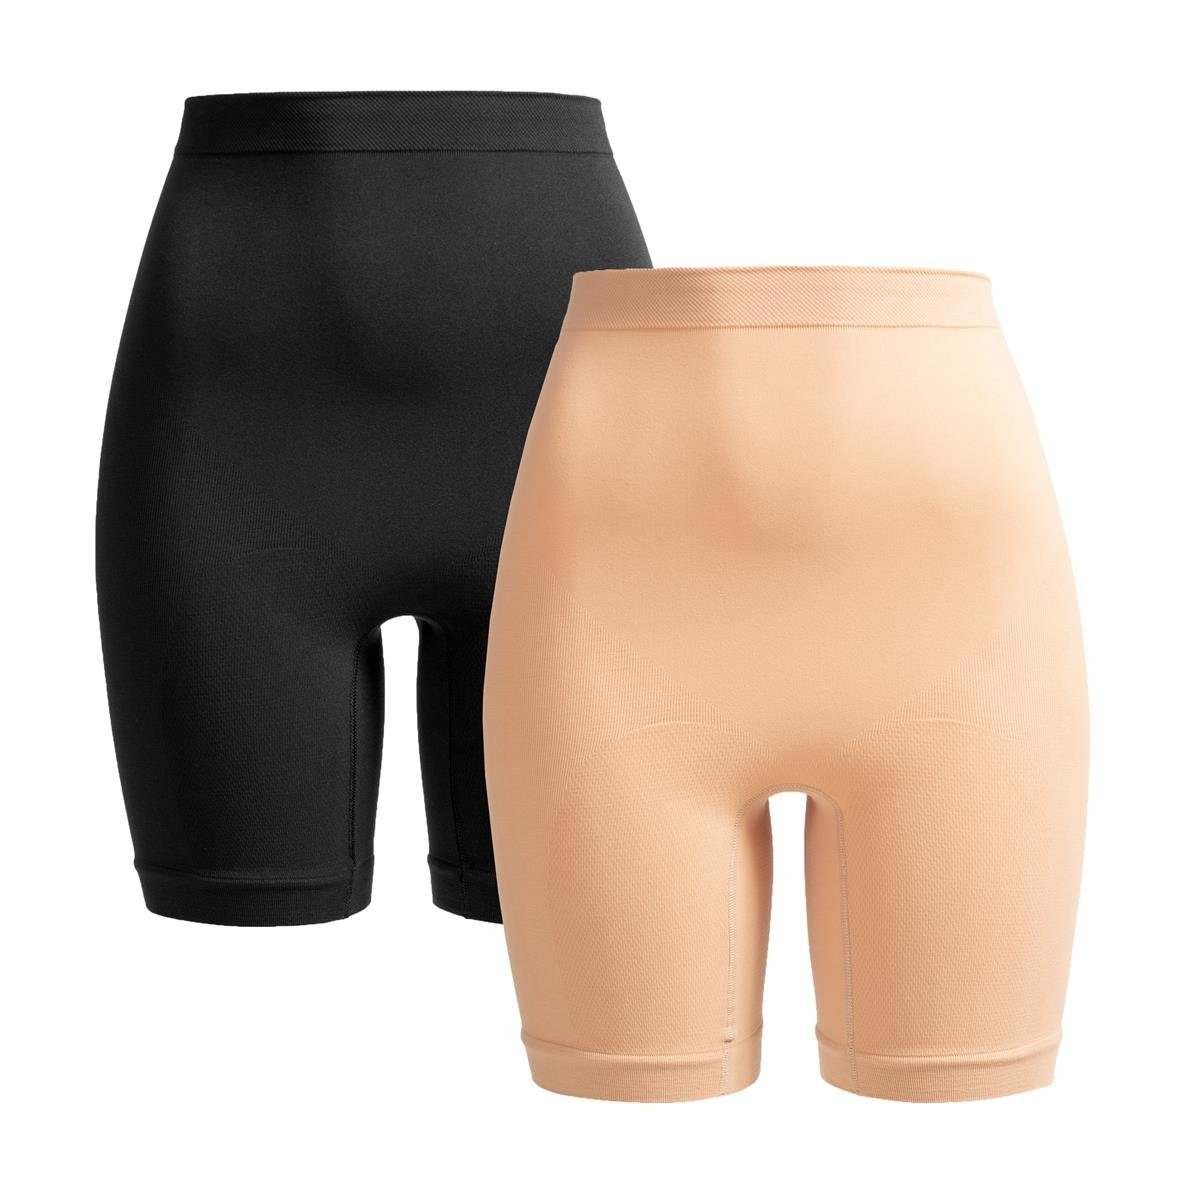 Herzmutter Shapingpants Shaping Shorts Damen - Shapewear Unterwäsche (Packung, 2-St) Schwarz/Beige